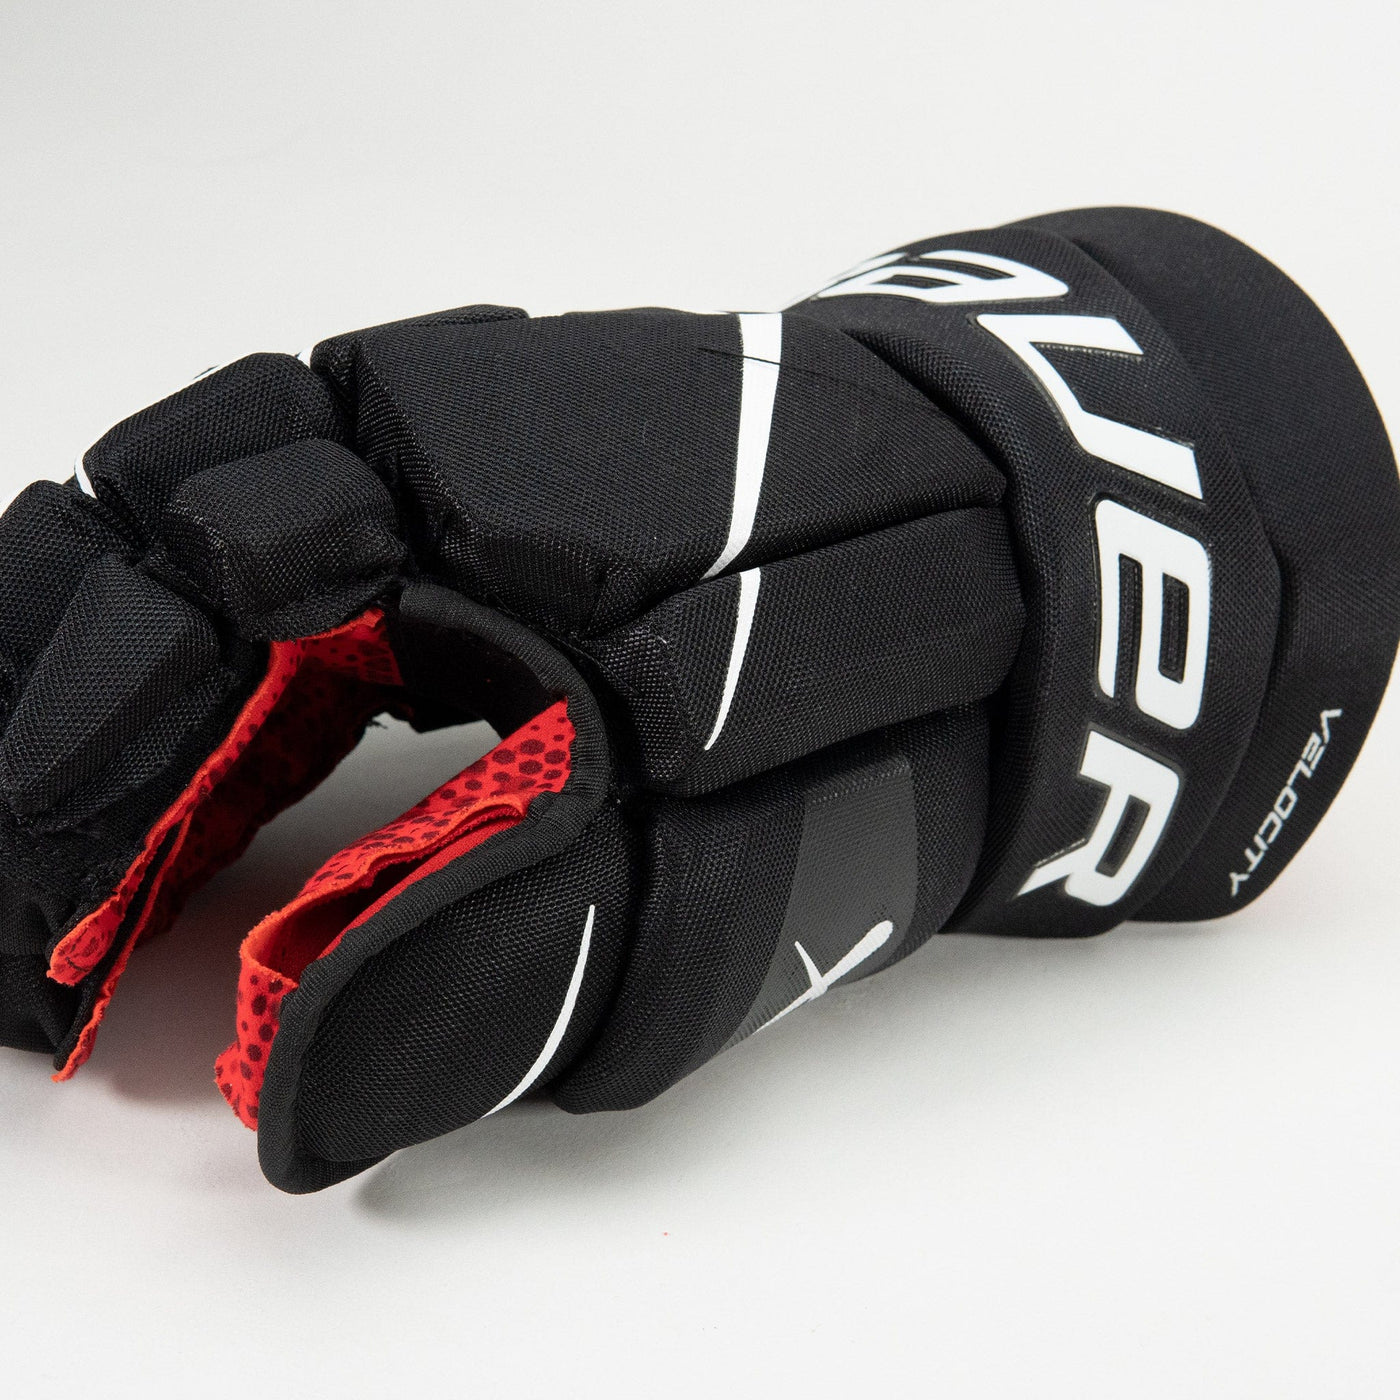 Bauer Vapor Velocity Senior Hockey Gloves - The Hockey Shop Source For Sports